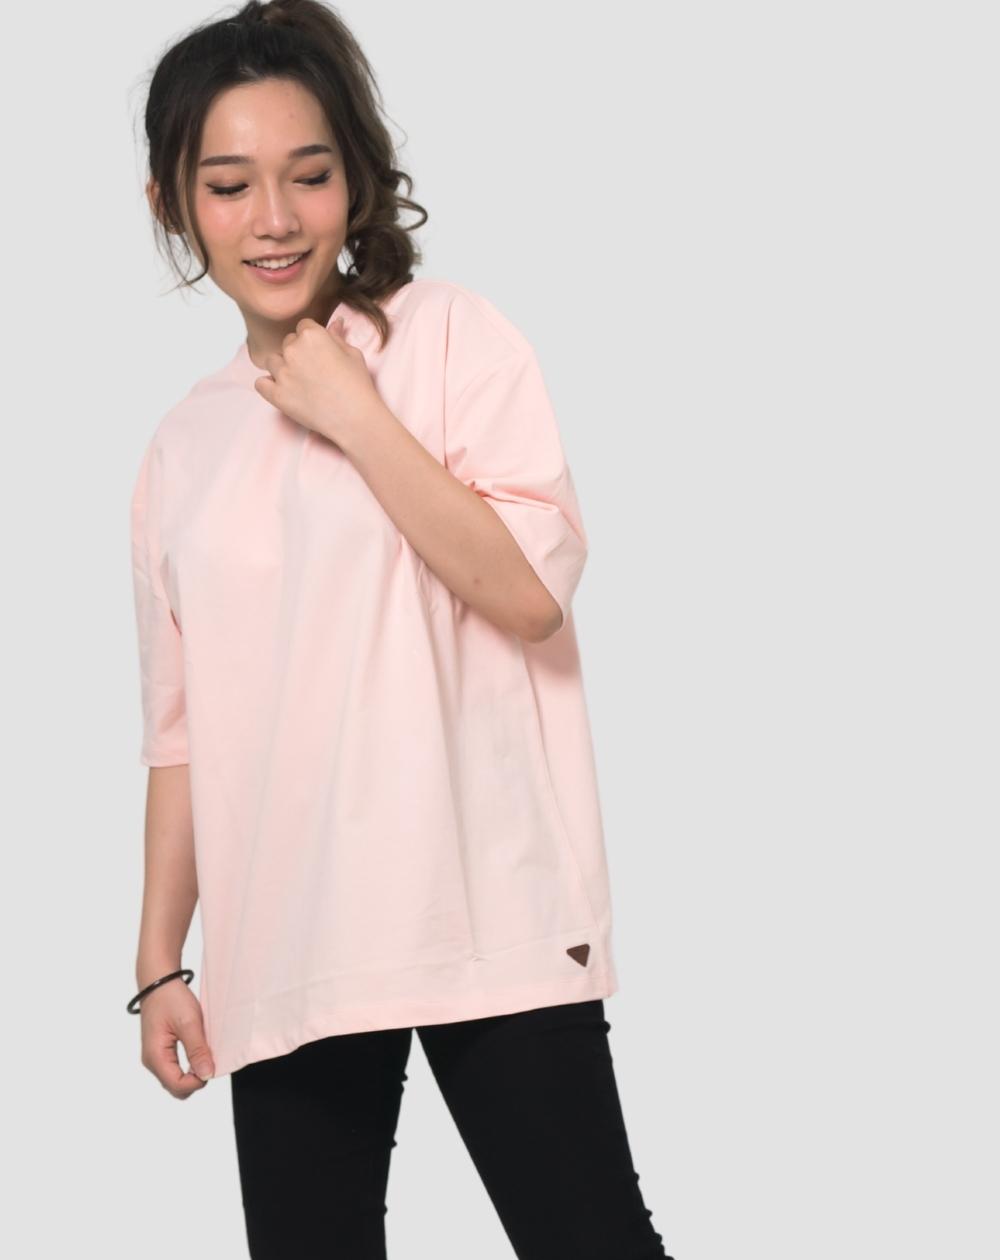 Buy Oversized Short-Sleeve T-Shirt - Order Tops online 5000006281 - PINK US